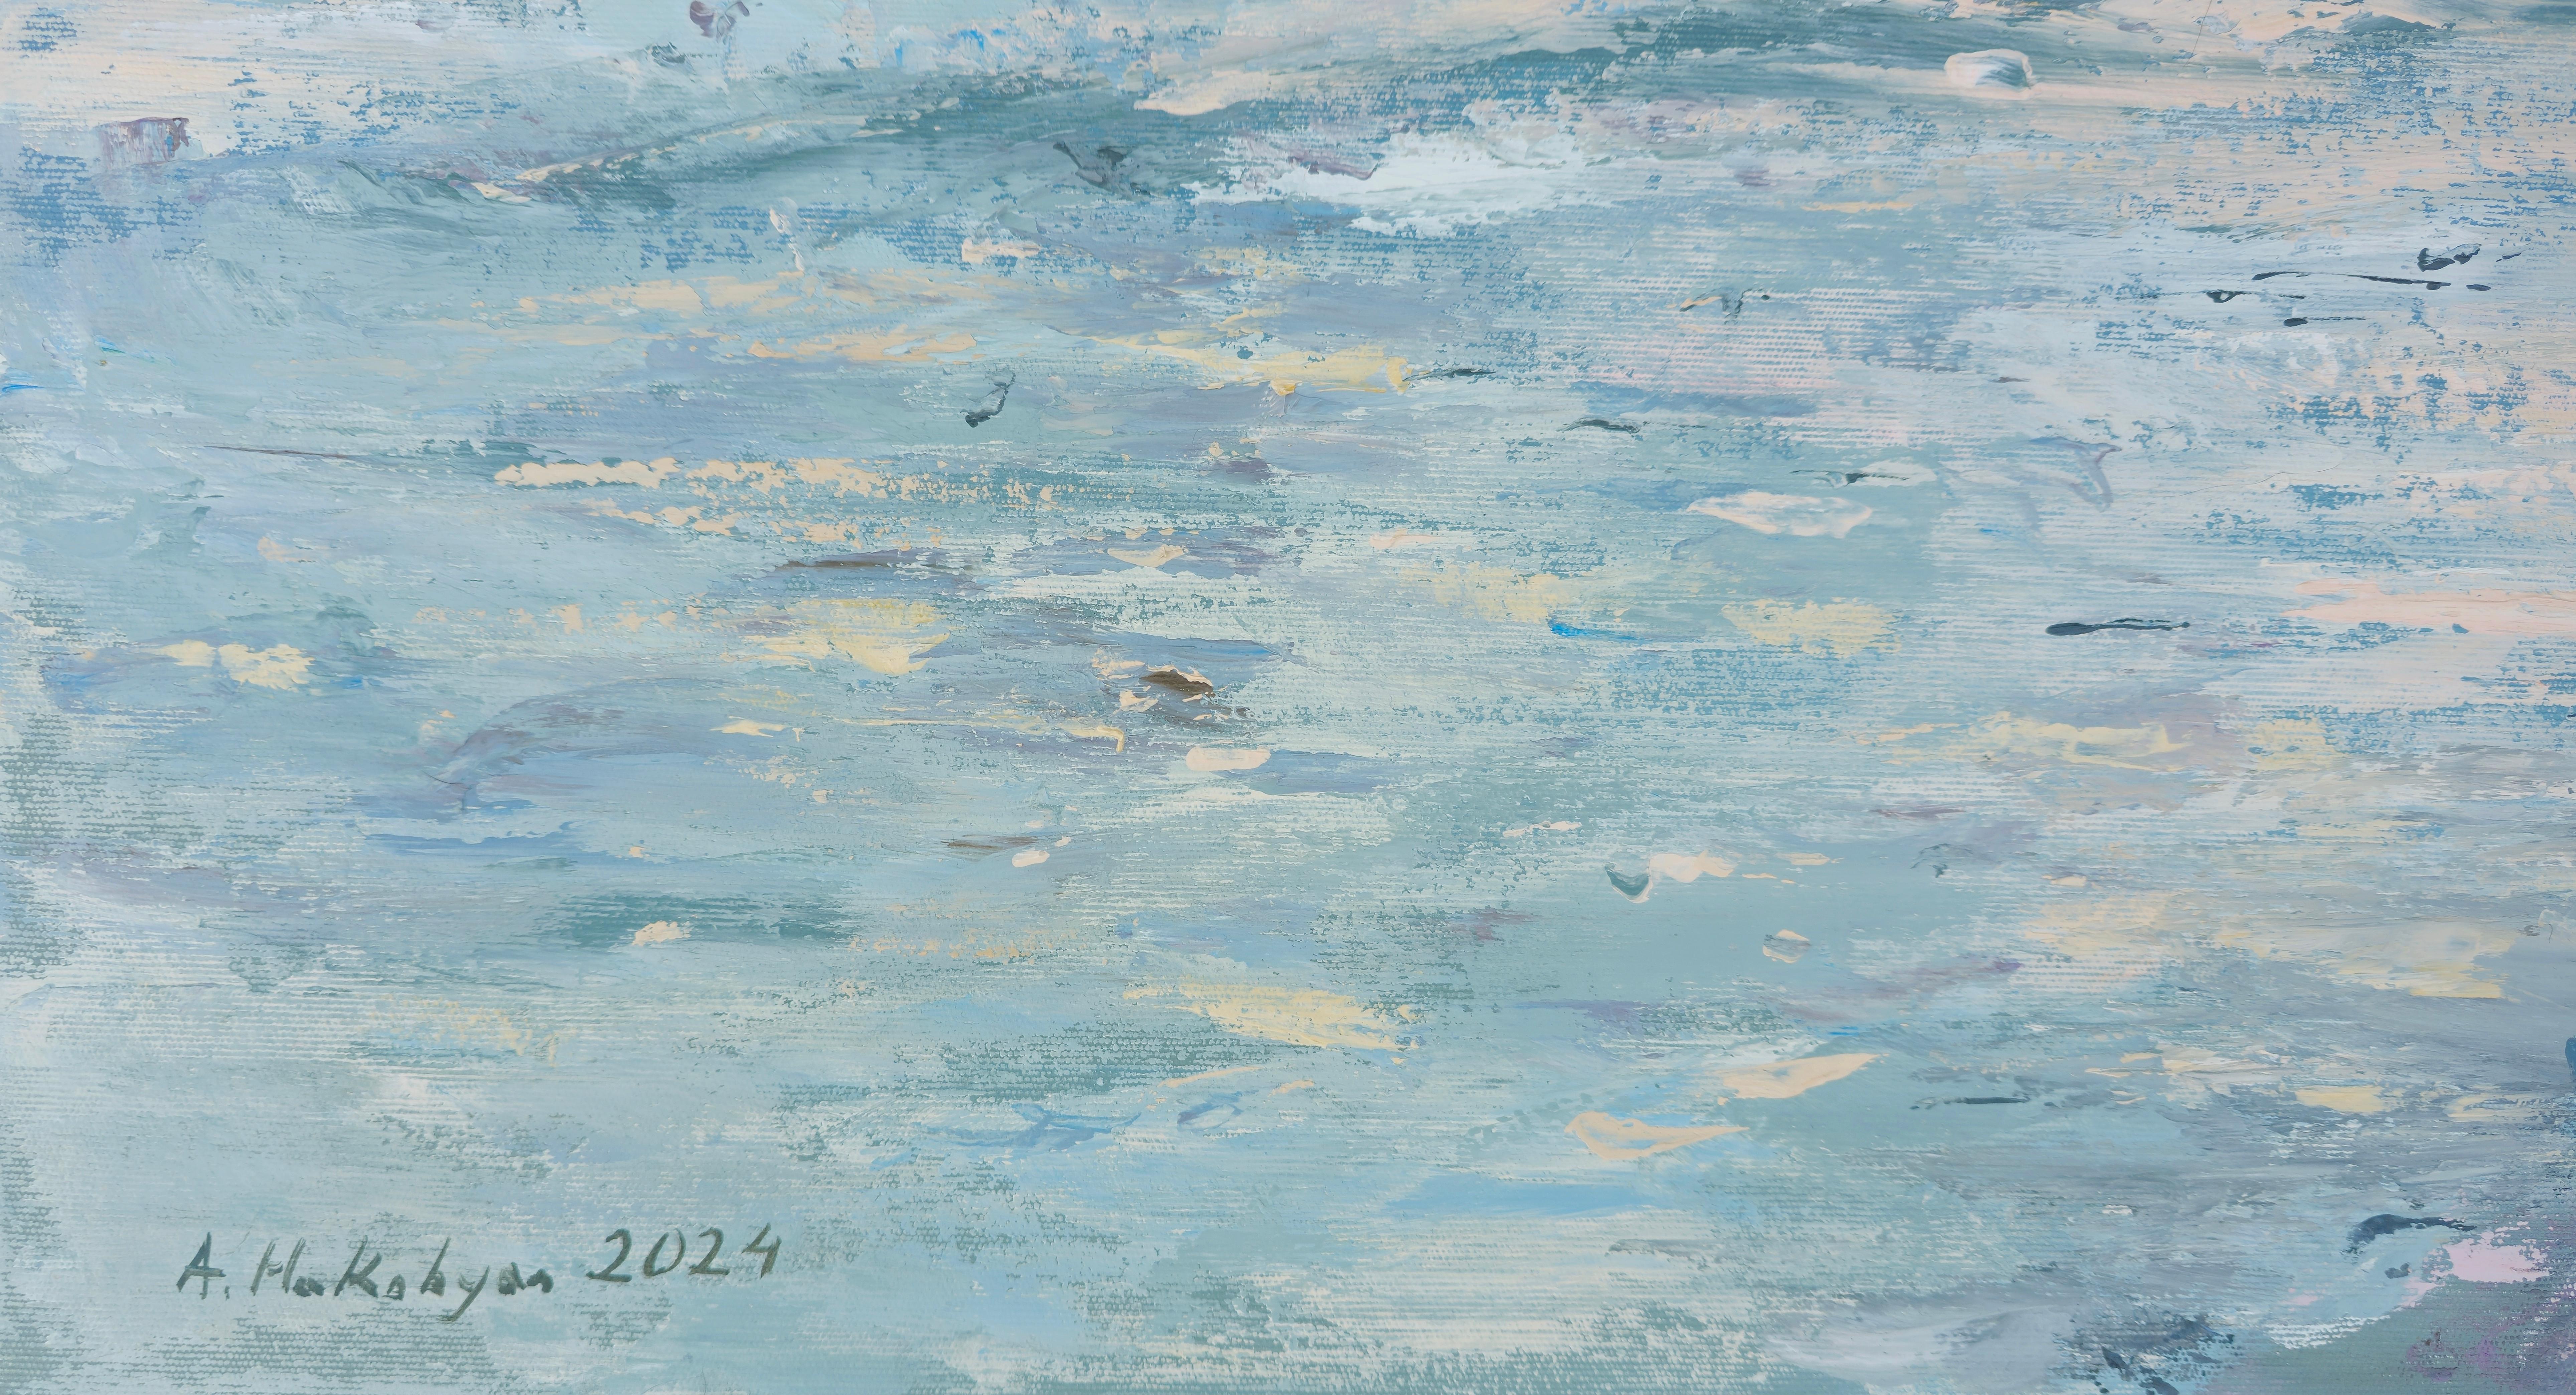 Artist: Ara H. Hakobyan
Work: Original Oil Painting, Handmade Artwork, One of a Kind.
Medium: Oil on Canvas
Year: 2024
Style: Impressionism
Title: Ocean Serene
Size: 31.5